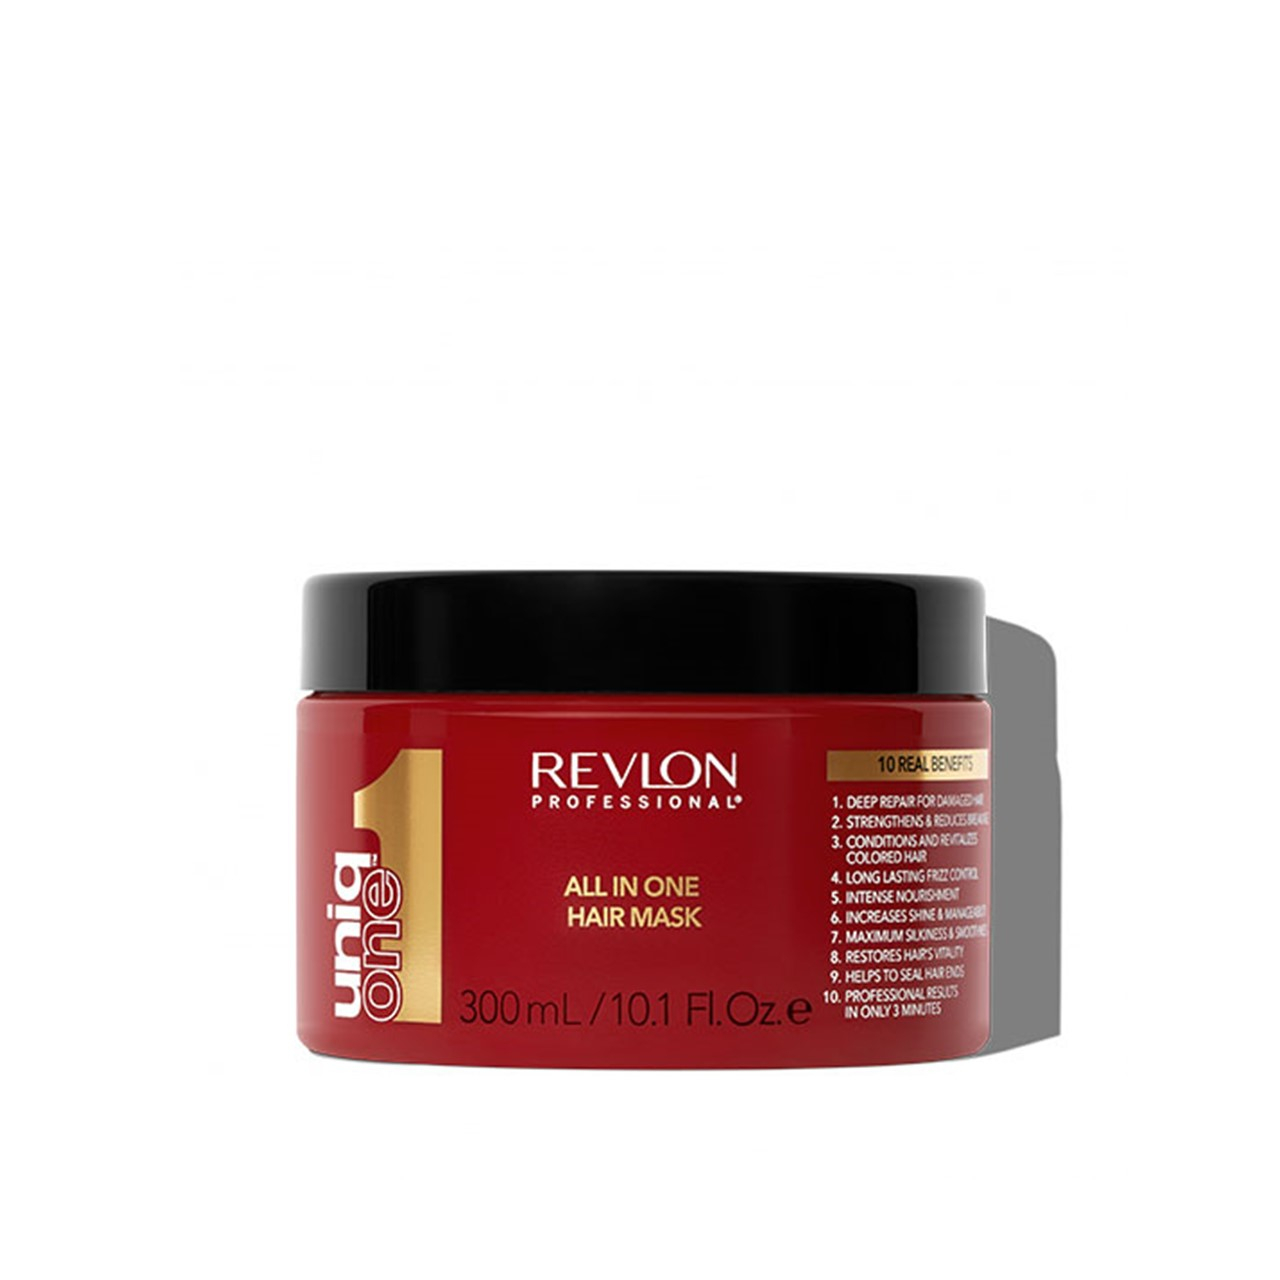 Professional · In USA Hair oz) UniqOne All One Revlon Buy Mask (10.14fl 300ml